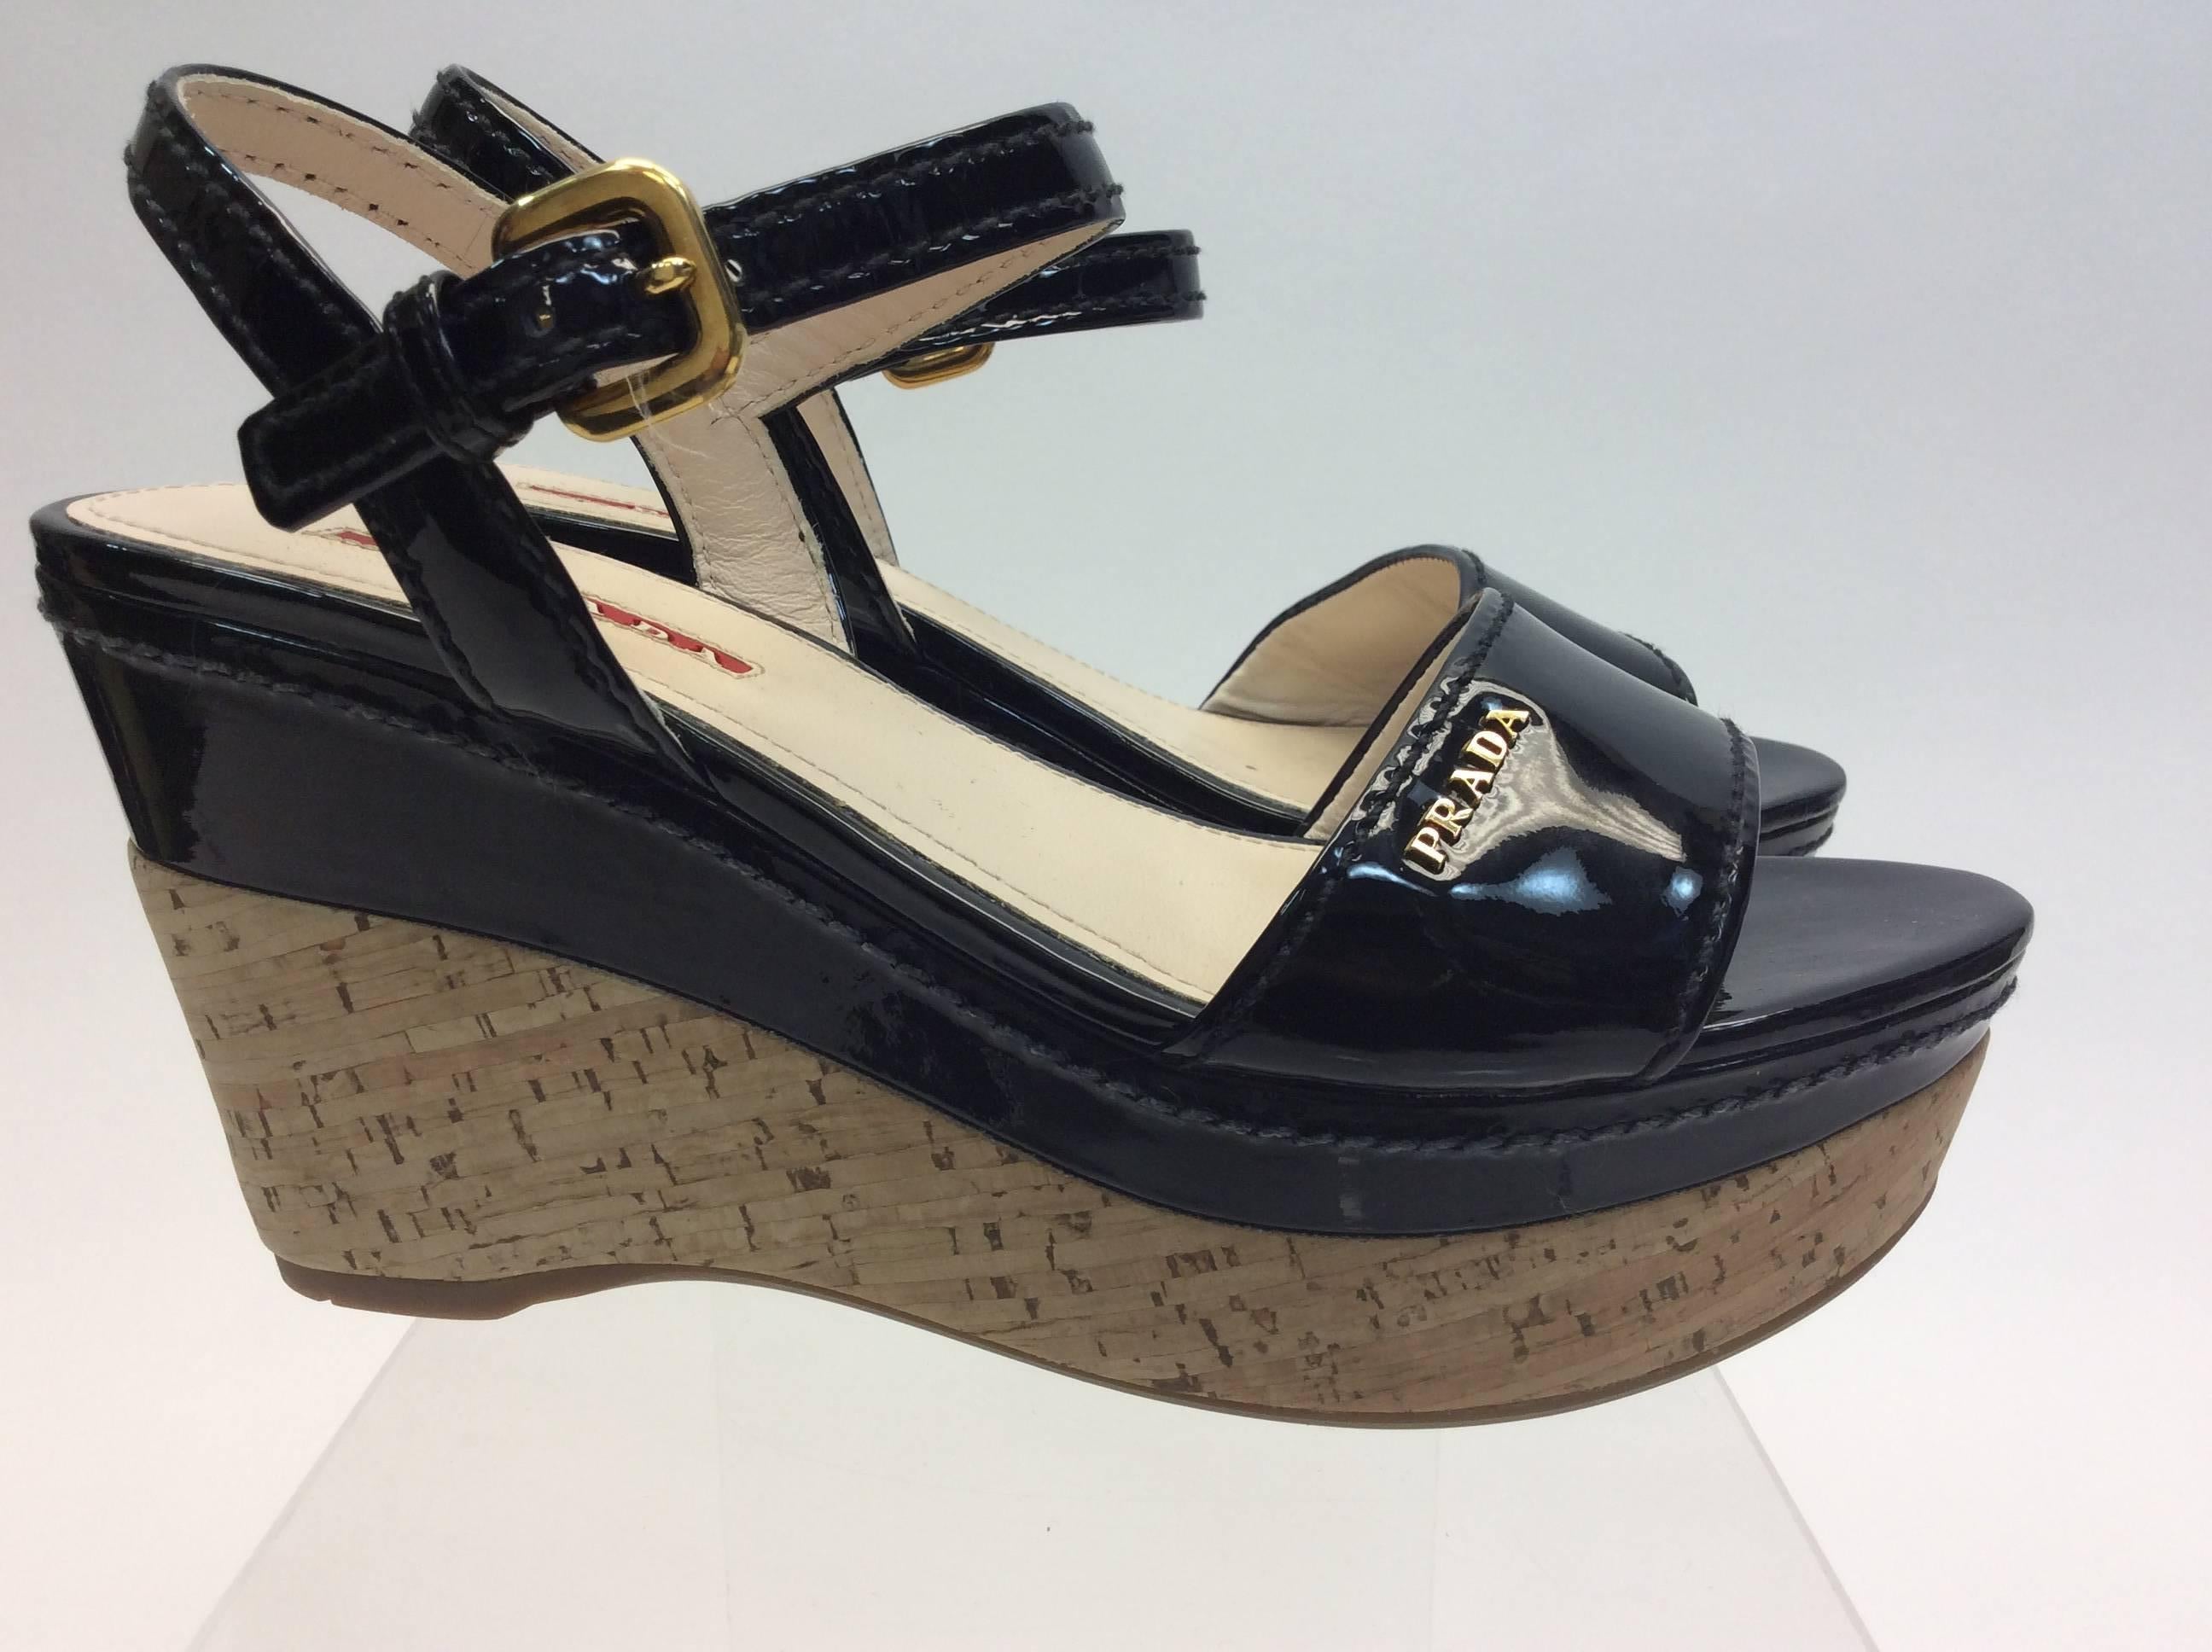 Prada Black Wedge Sandal
$199
Platform 1.5